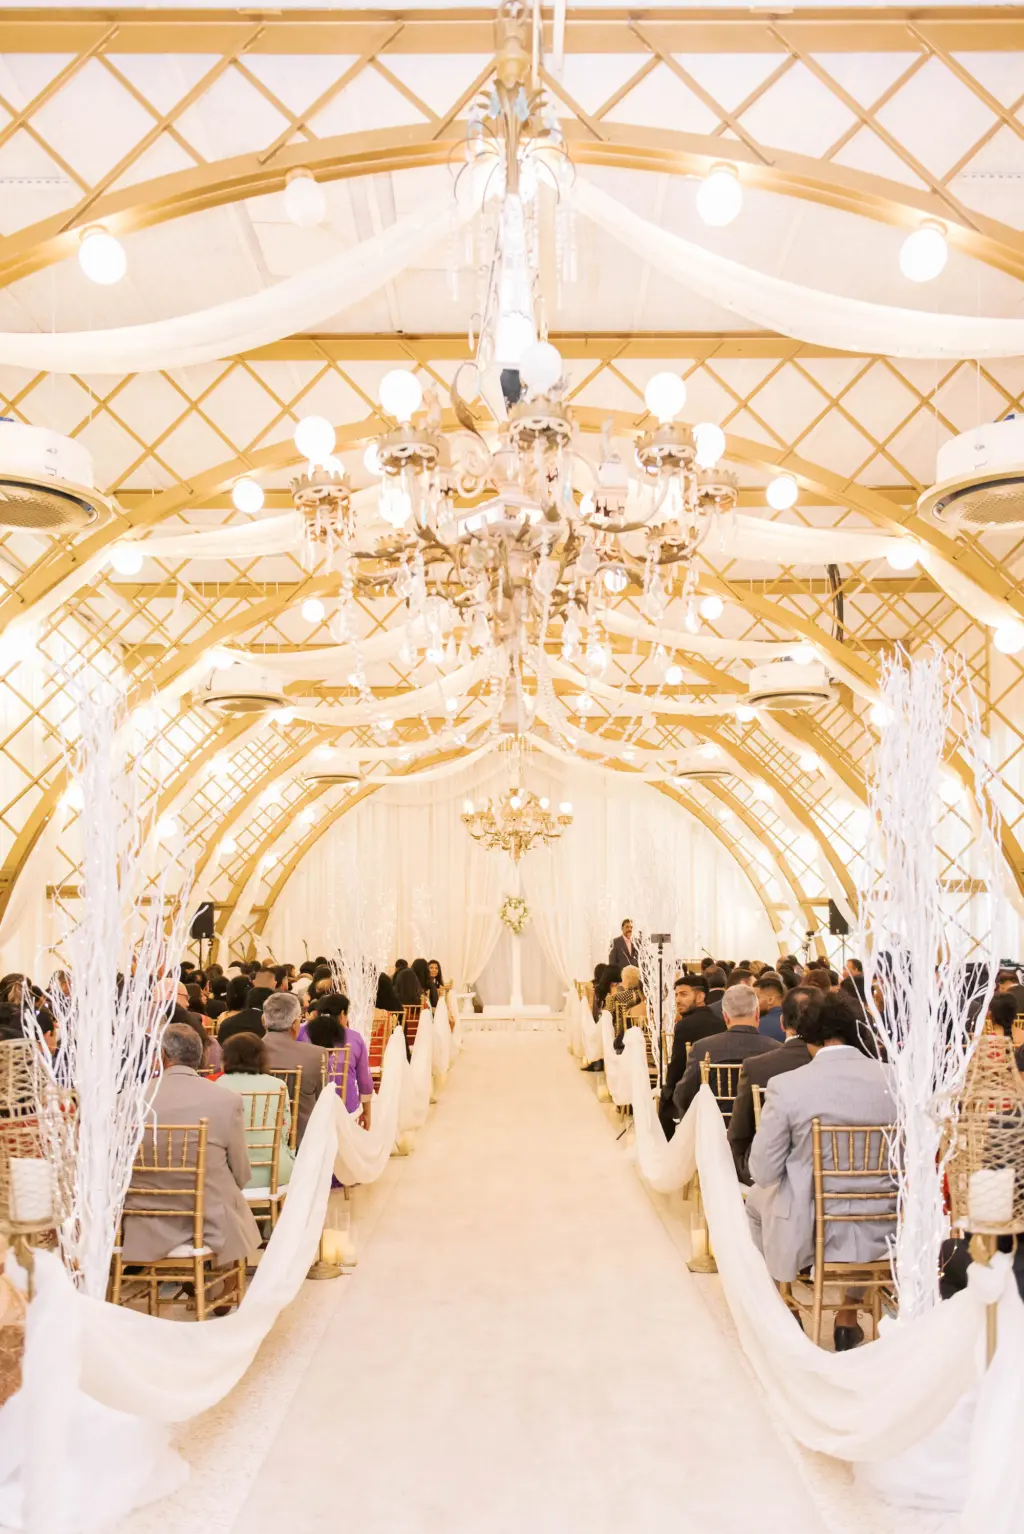 Aisle Drapery for Winter Wonderland Wedding Ceremony Inspiration